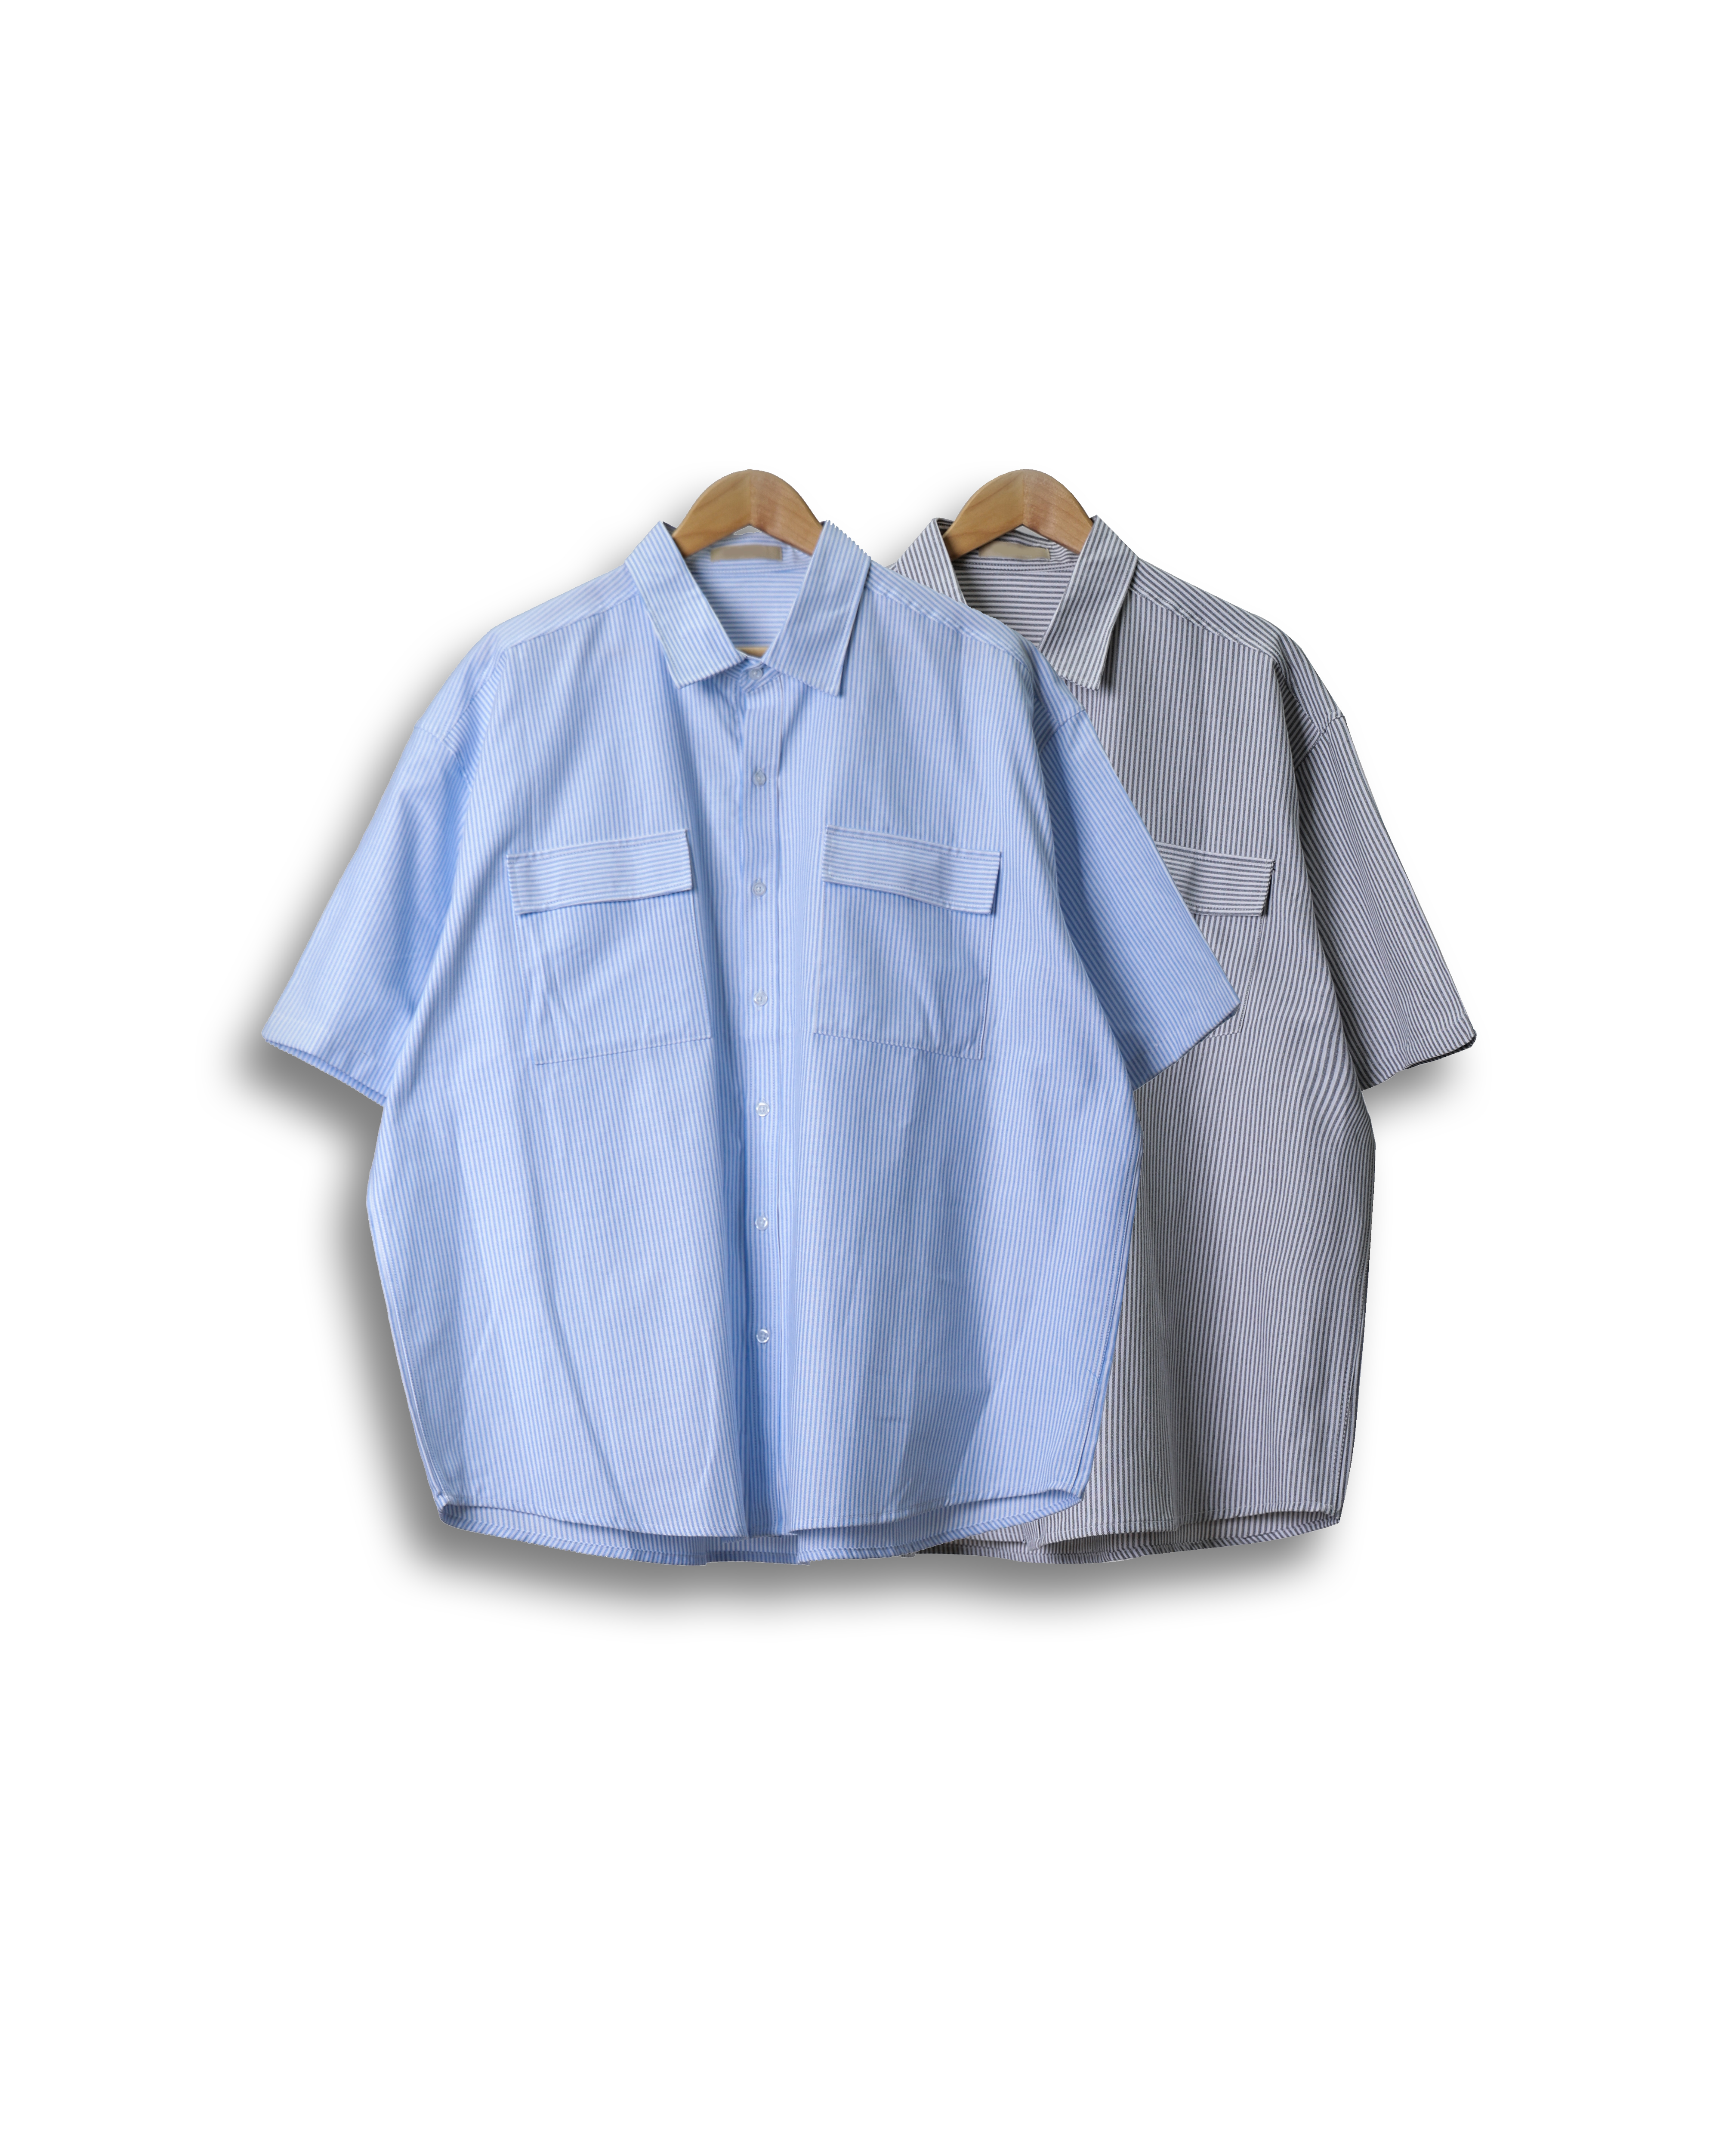 SPRY Two Pocket City Striped Half Shirts (Black/Sky Blue)